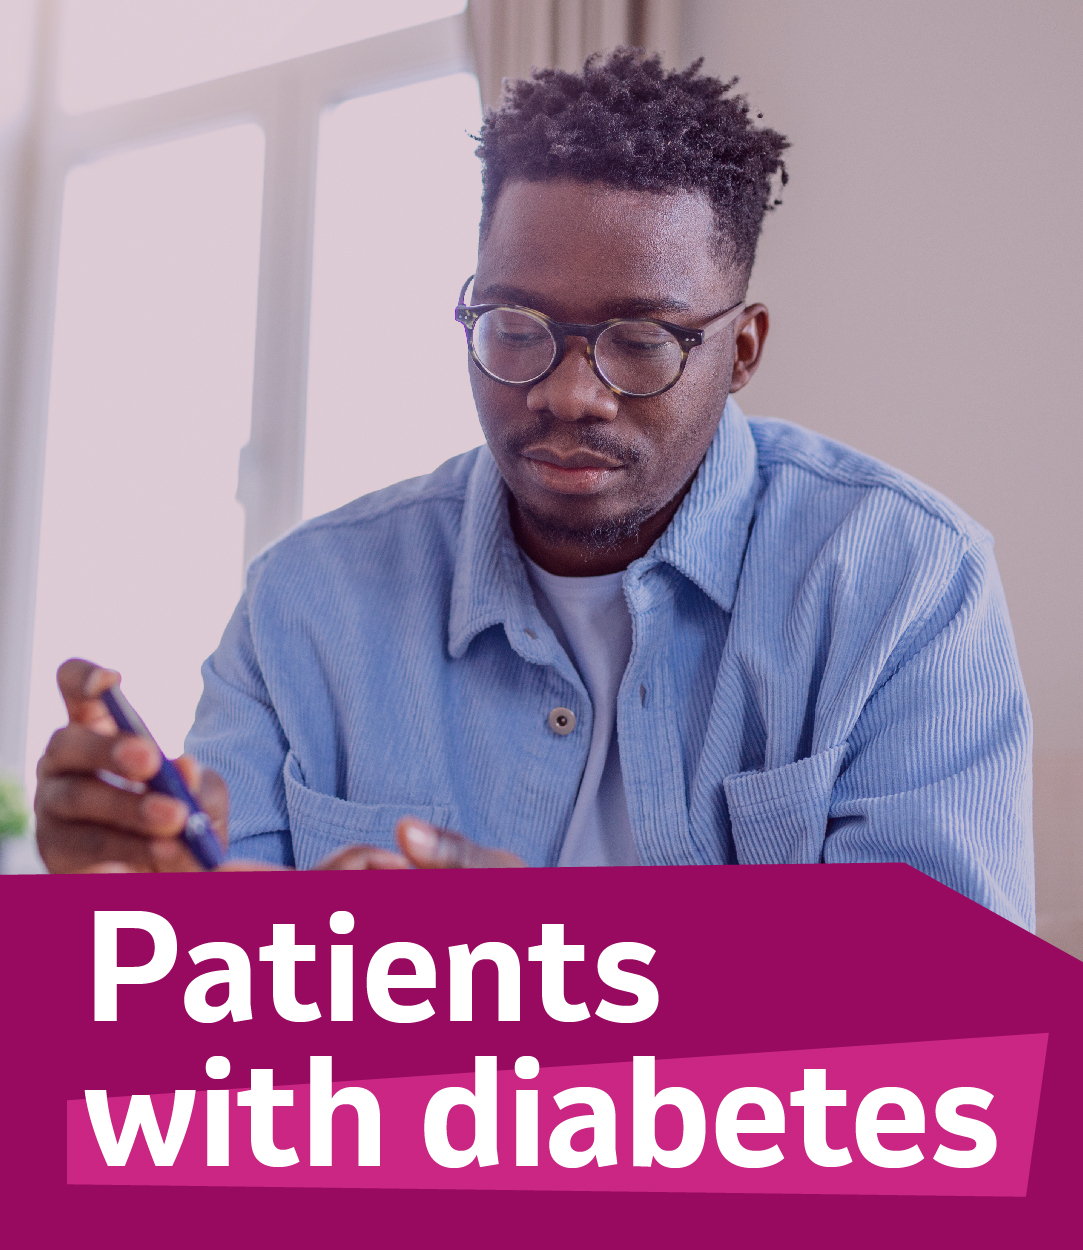 Patients with diabetes